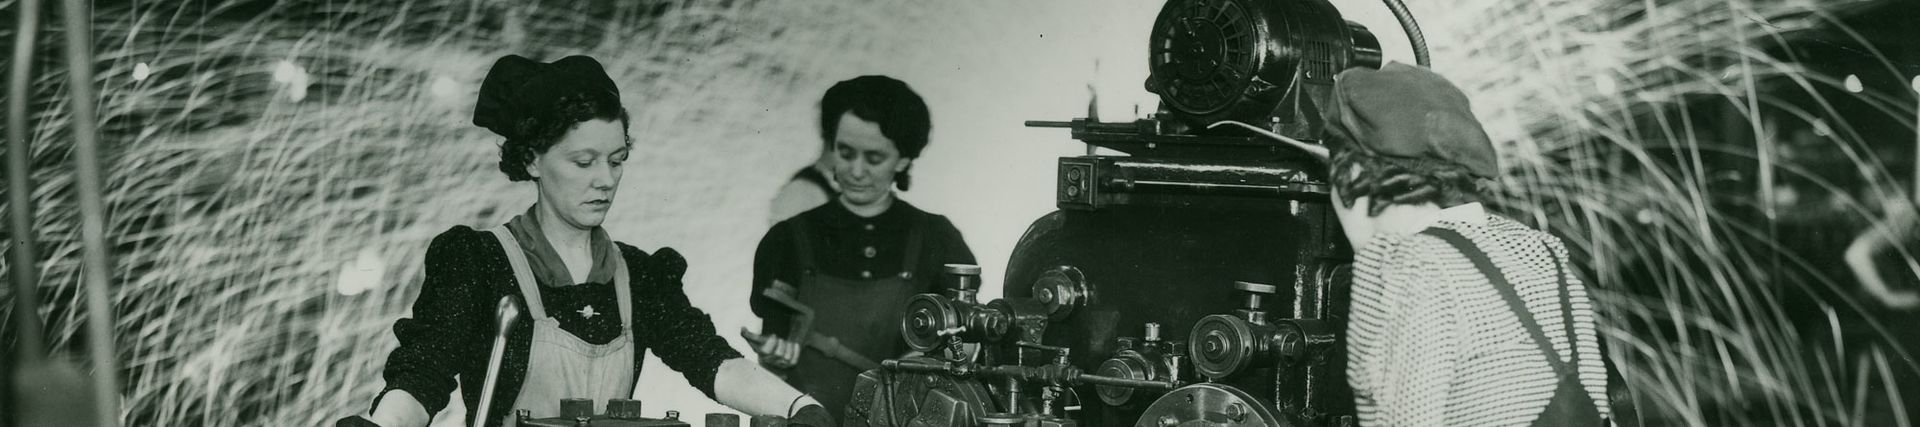 Female Lathe Operators at Acton Works 1942